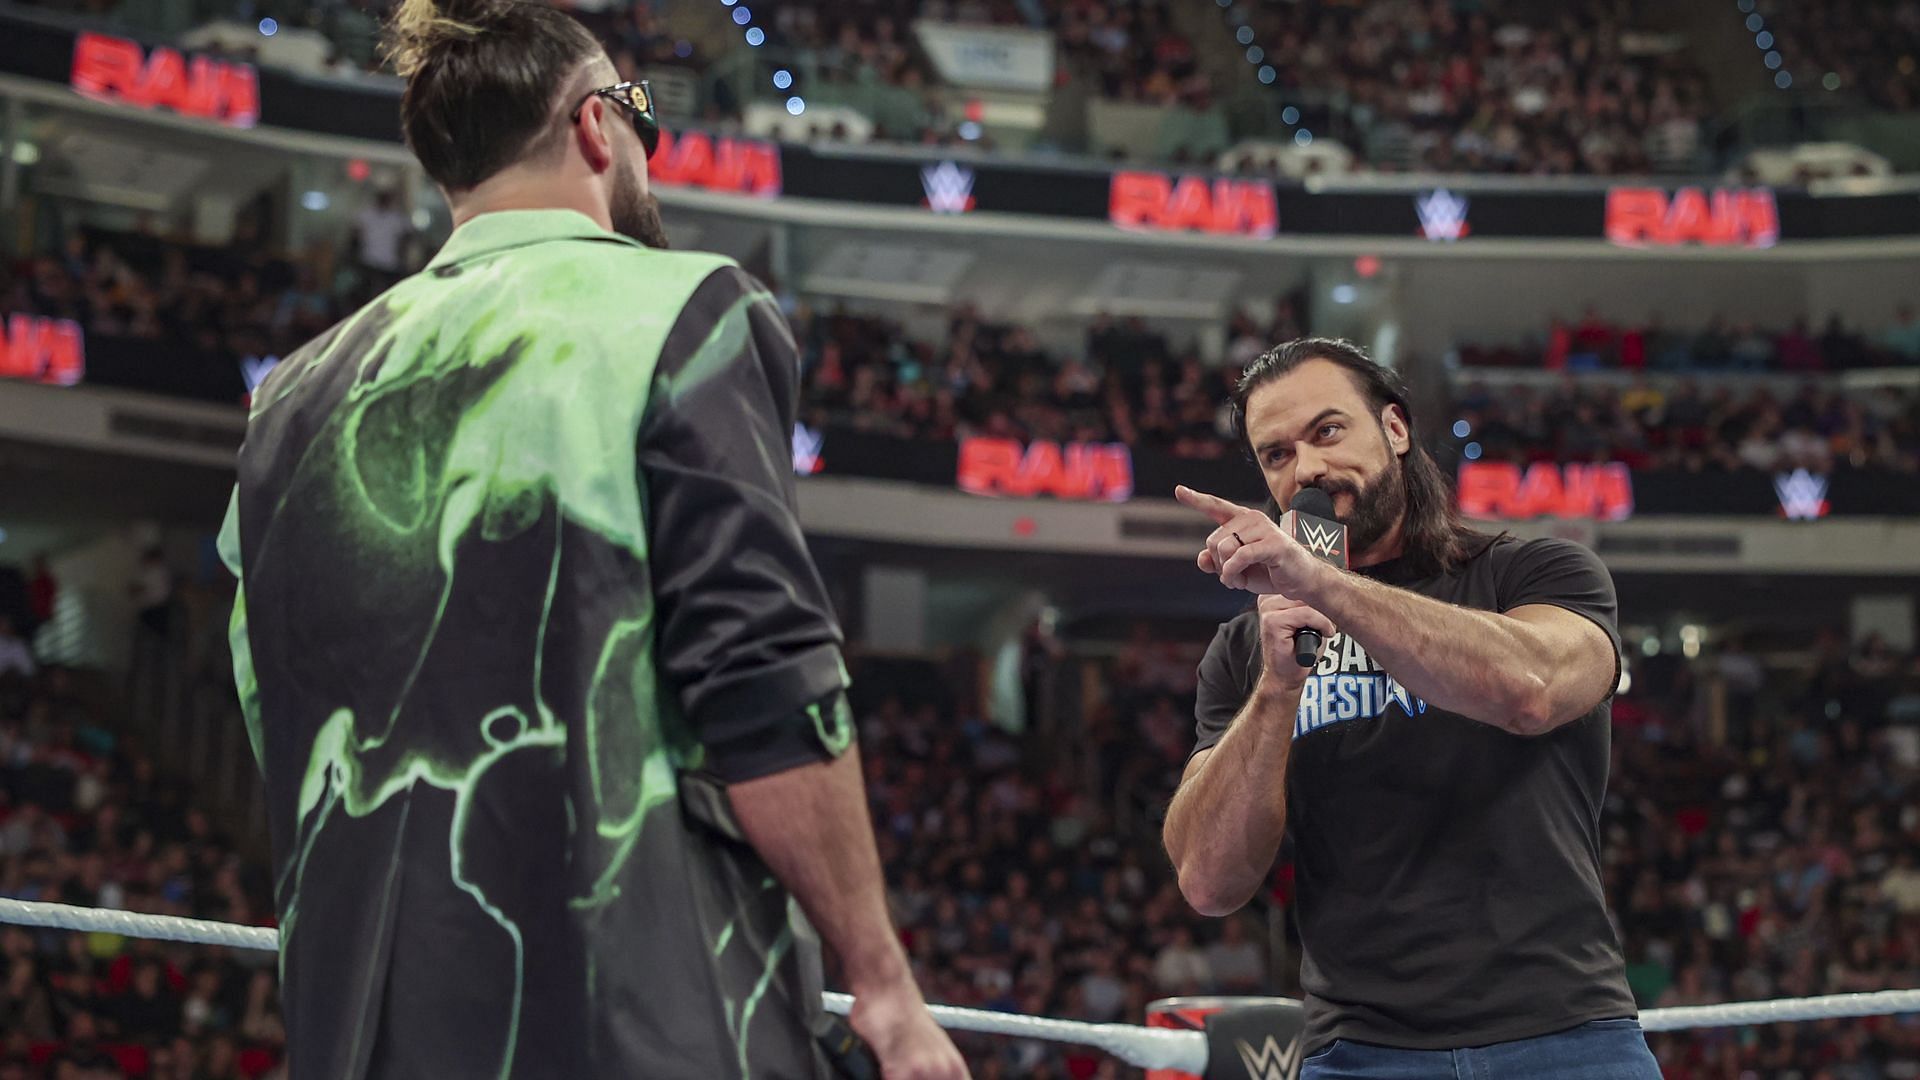 Seth Rollins and Drew McIntyre trade words on WWE RAW